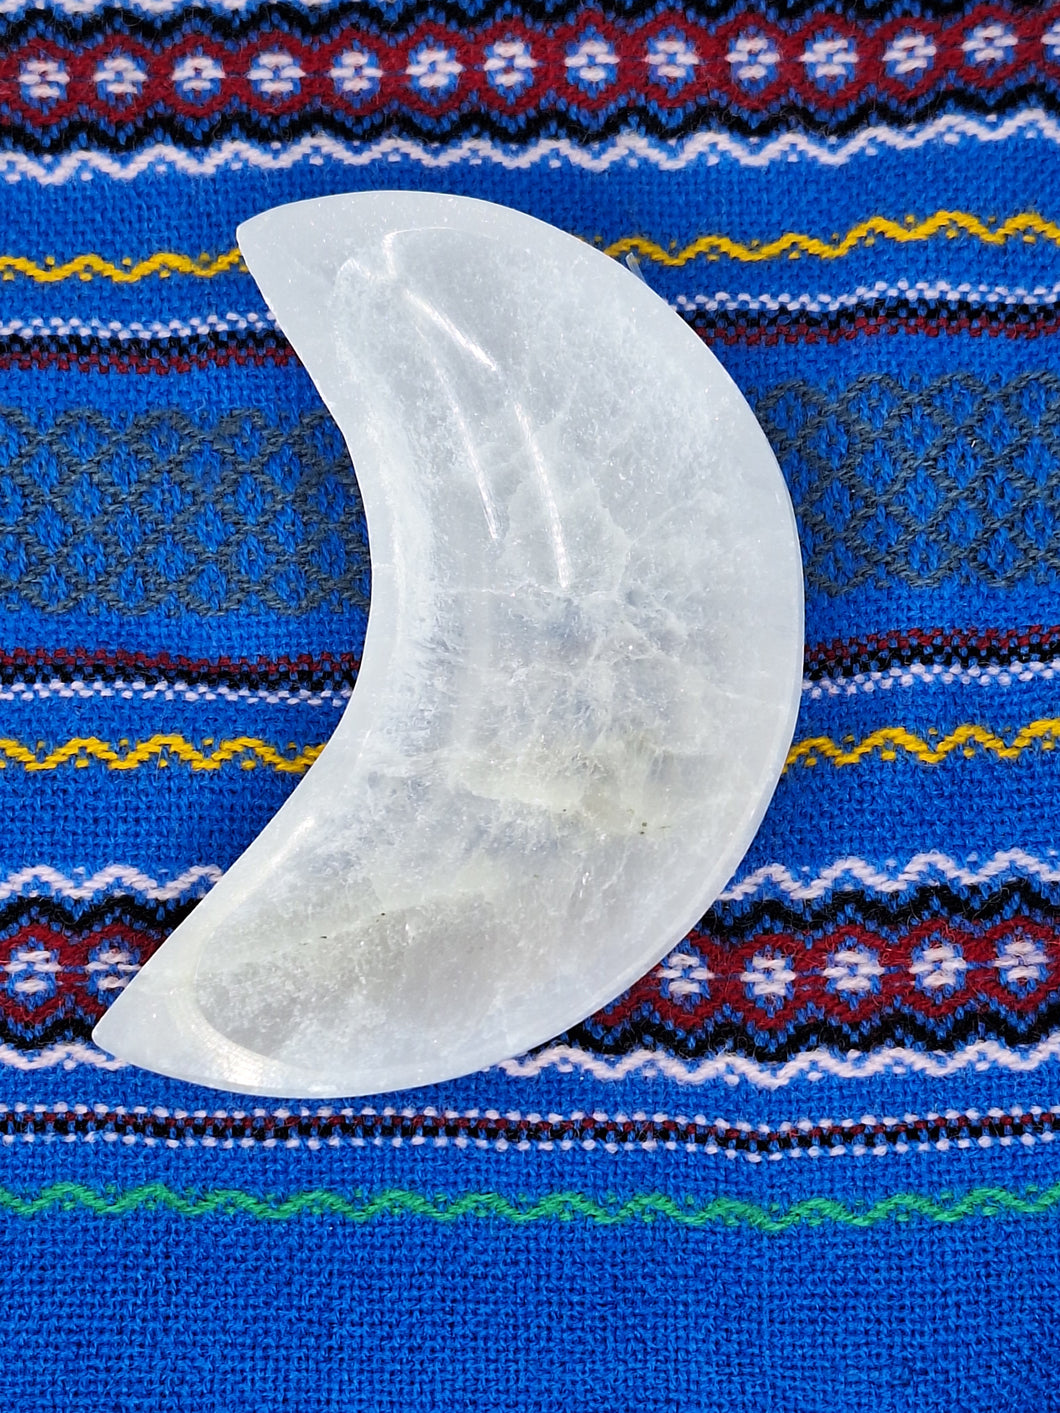 A Selenite Bowl Crescent Moon Shaped holds white quartz stone on blue and white striped cloth.